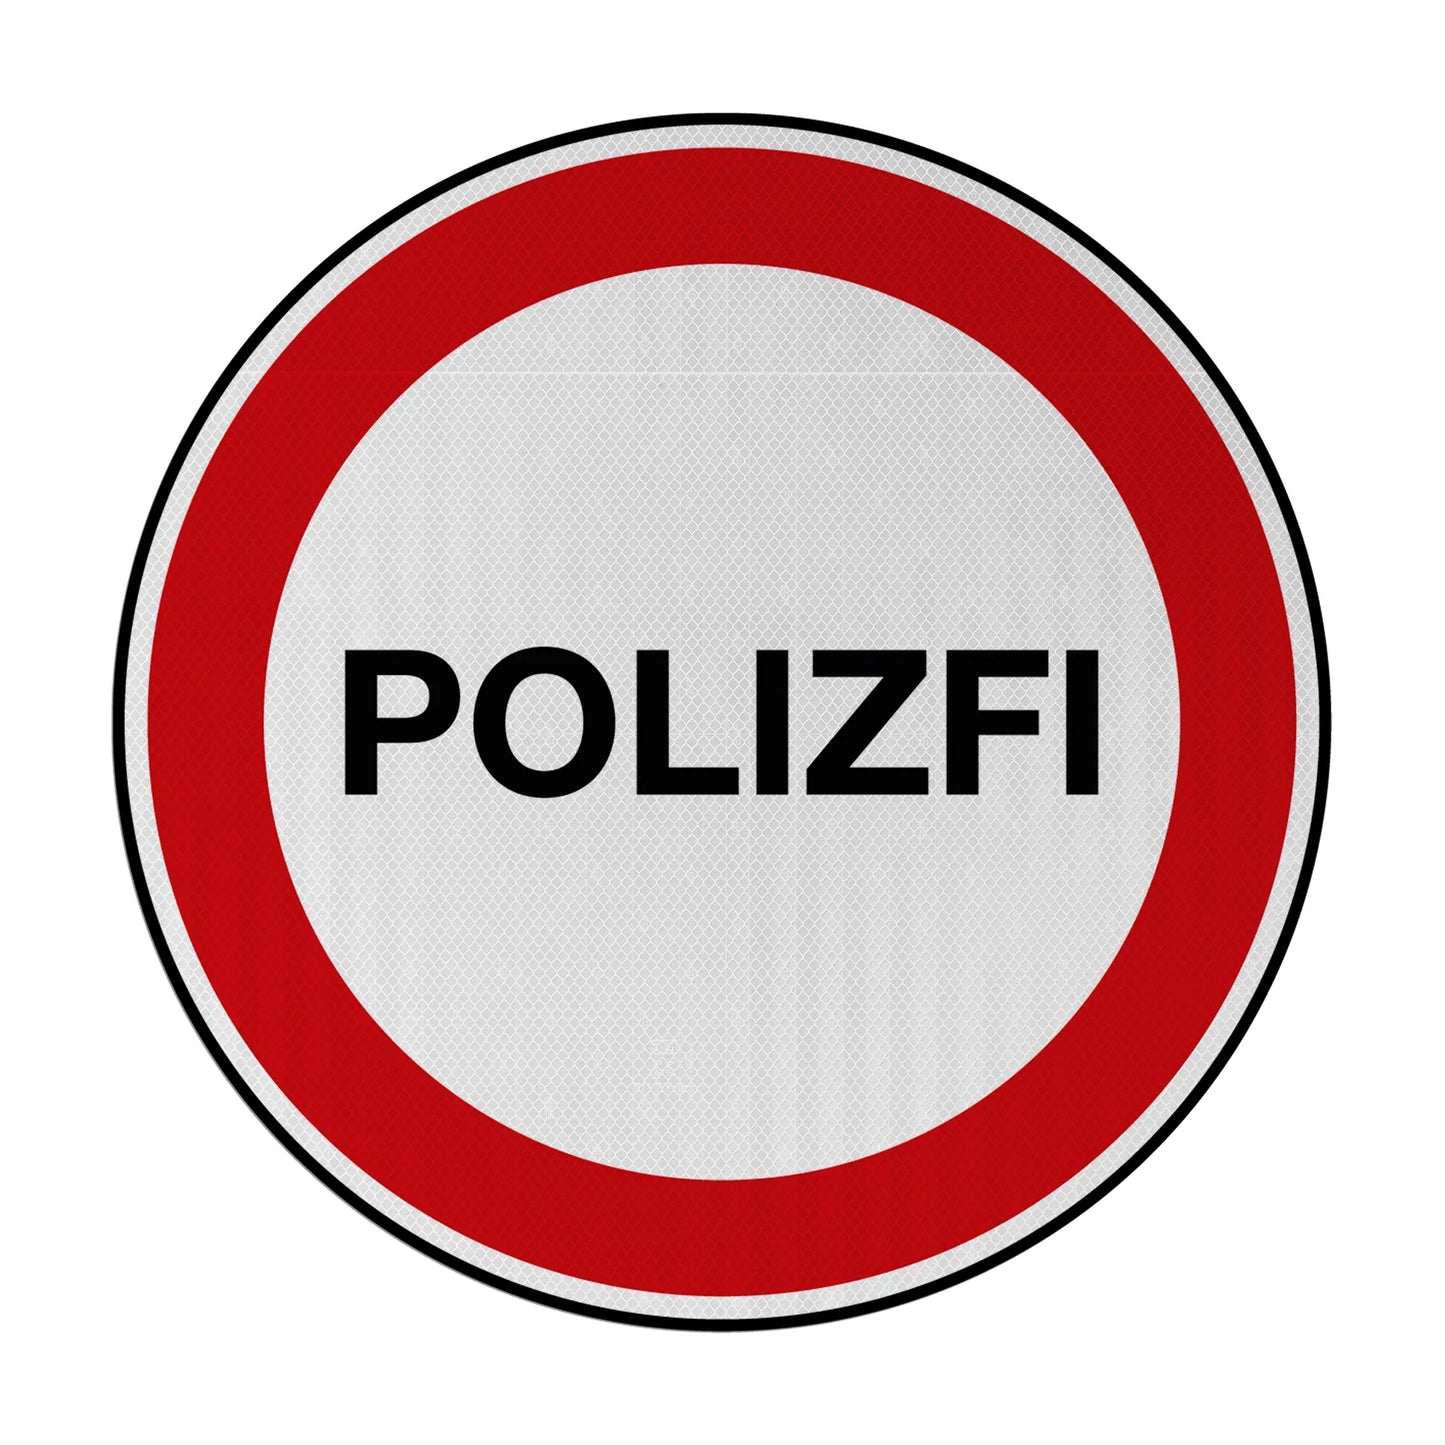 Polizfi Streetsign